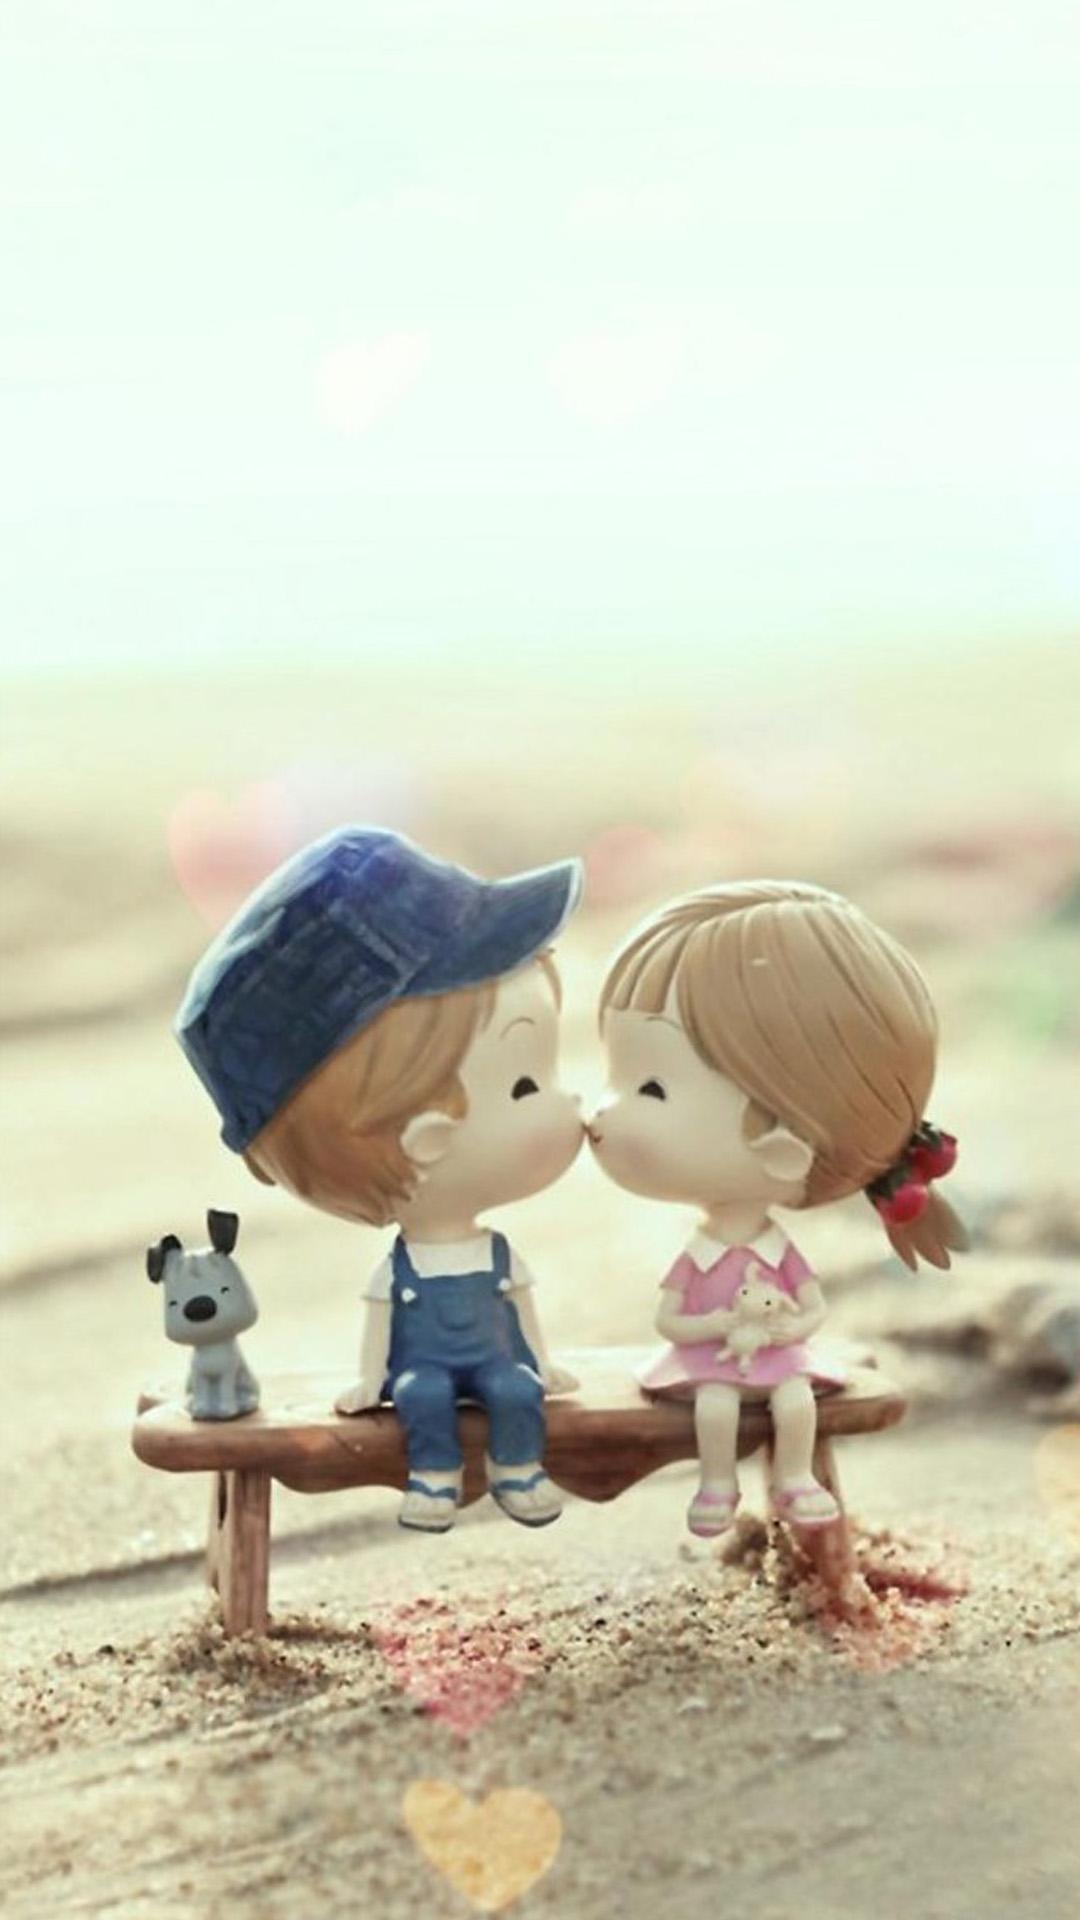 Cute Cartoon Kissing Couple iPhone 8 Wallpaper Free Download